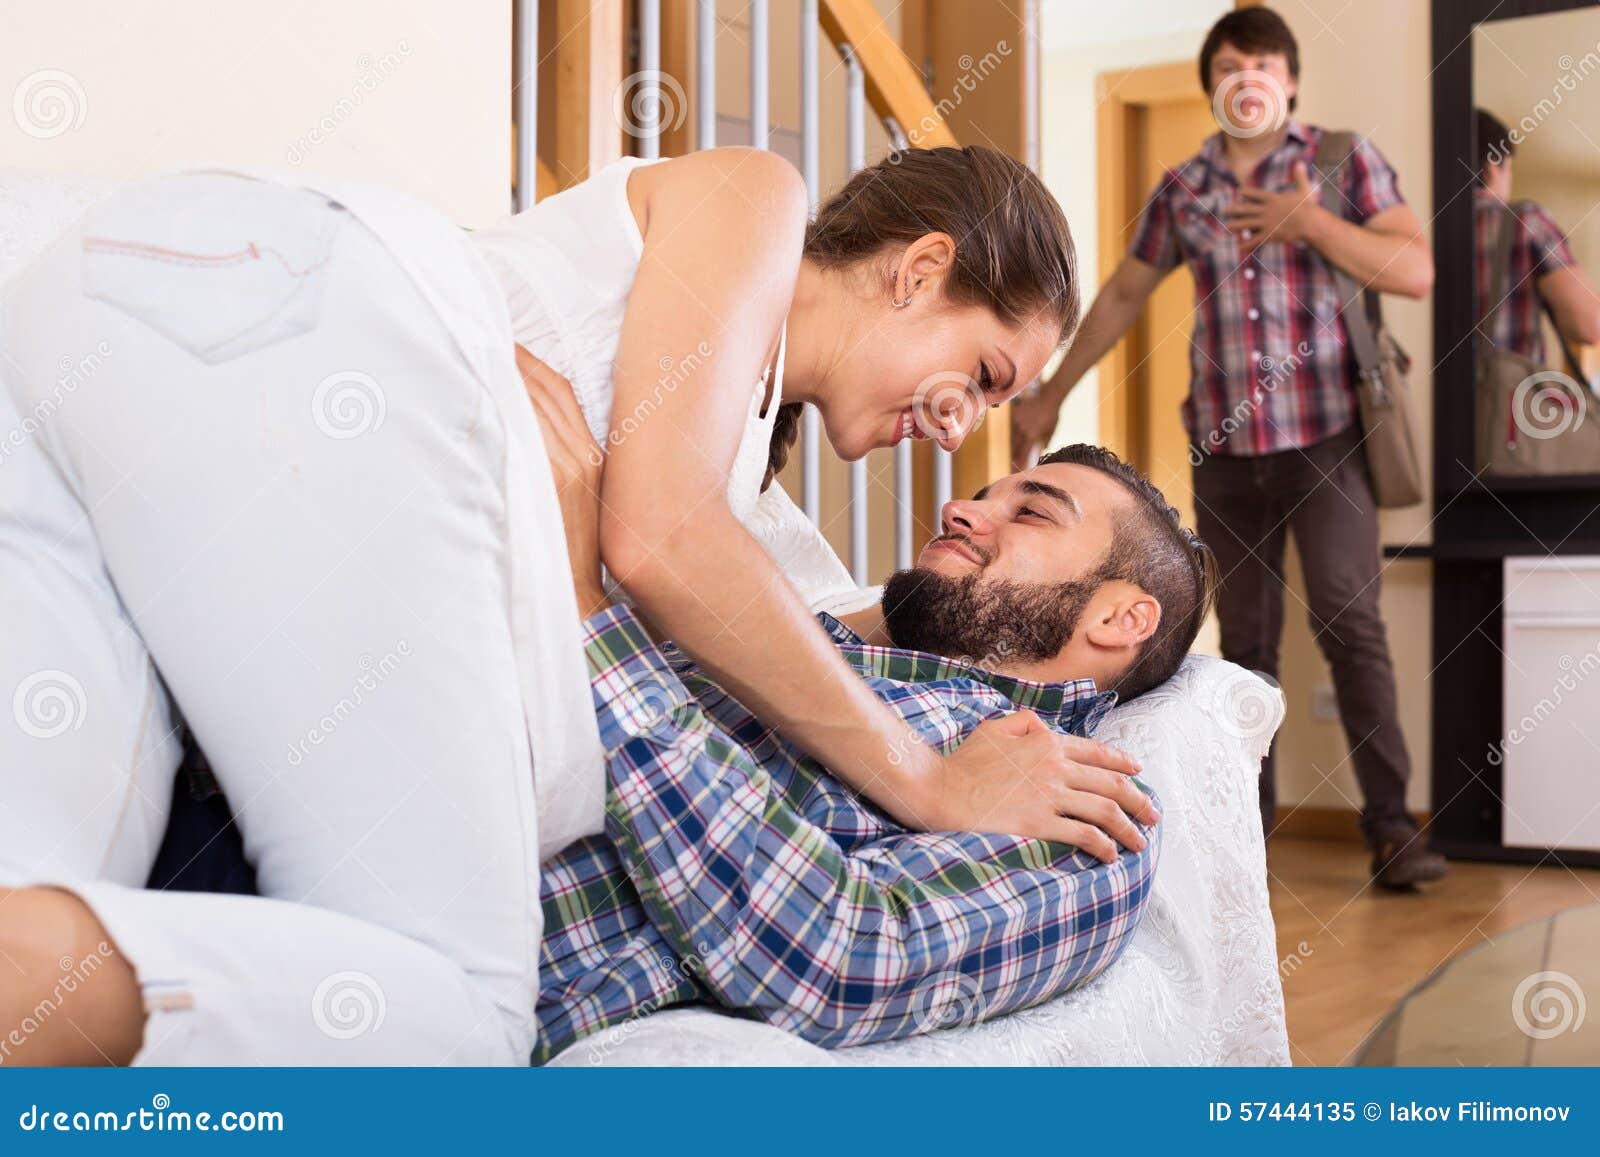 Husband Cheats While Wife Room